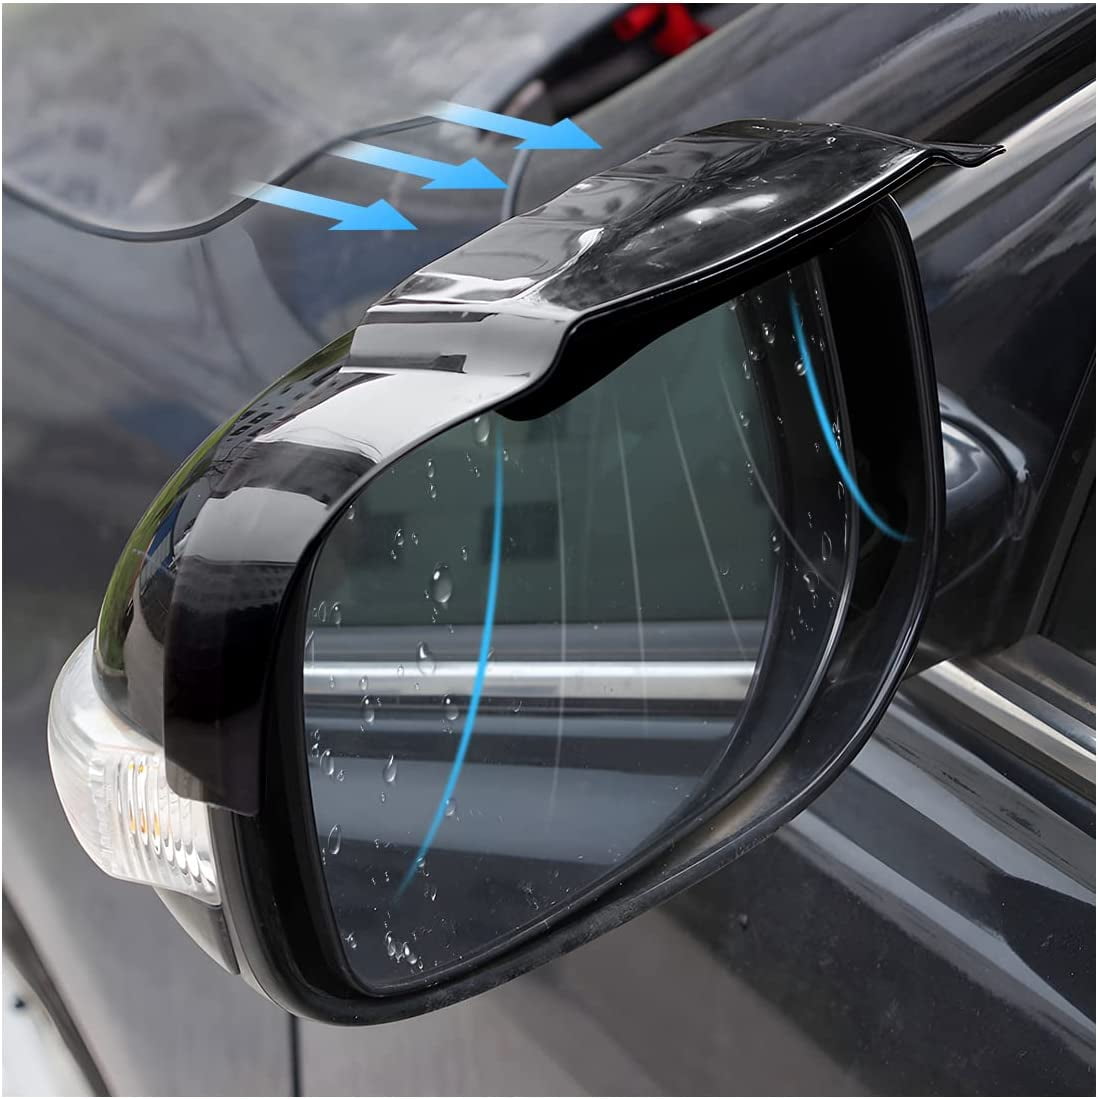 2x Car Rearview Mirror Rain Eyebrow Visor Clip-on Side Rain Cover  Accessories